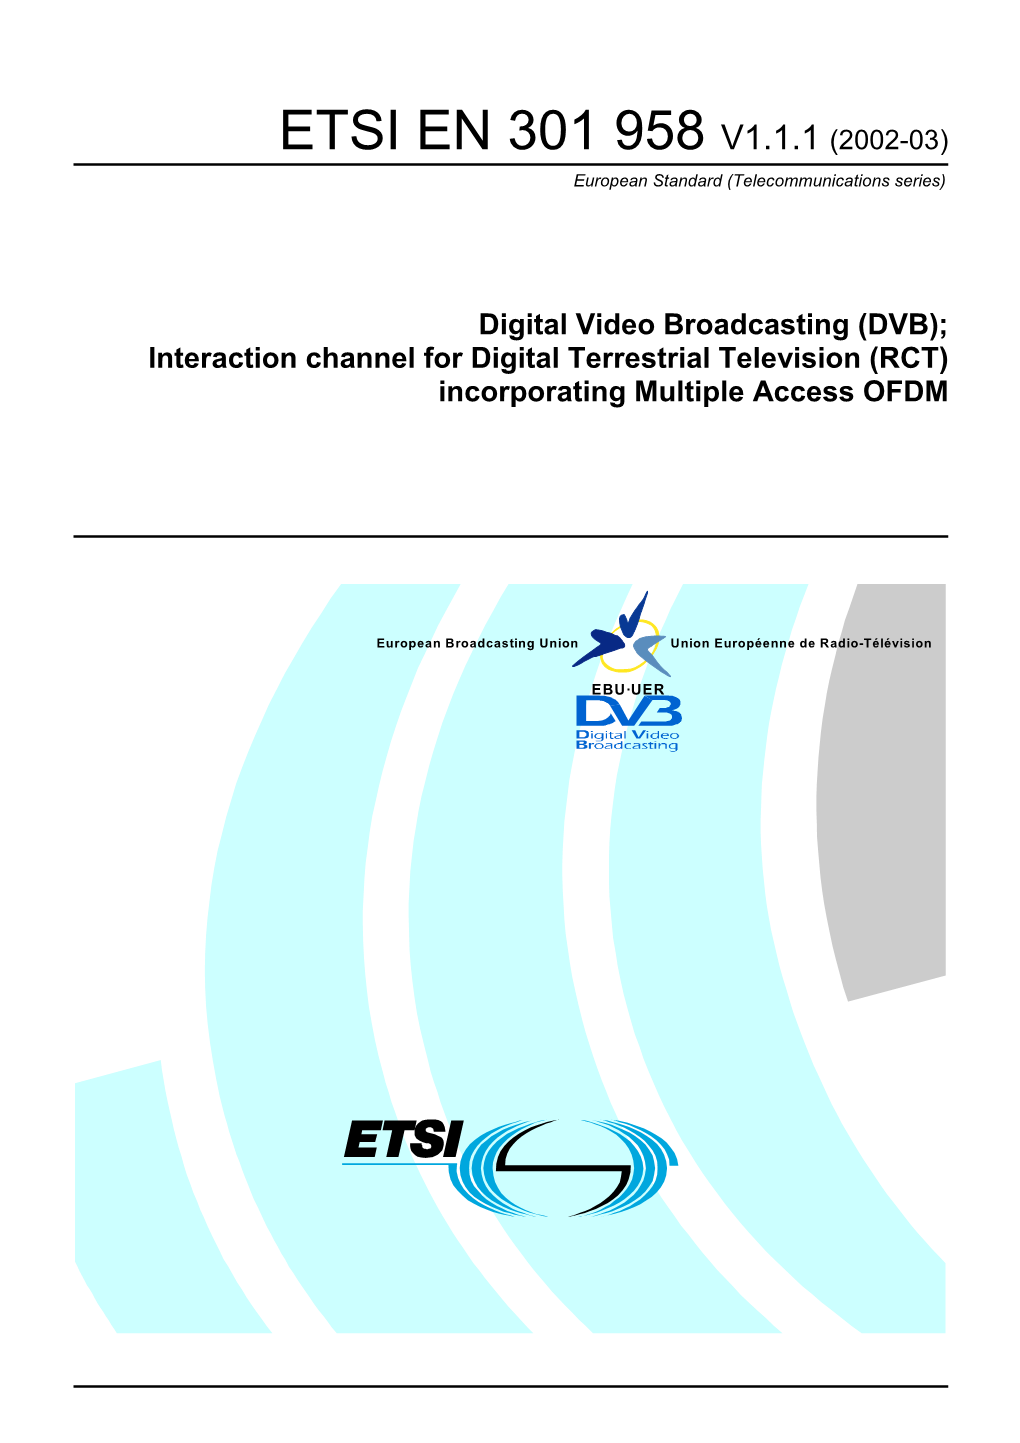 EN 301 958 V1.1.1 (2002-03) European Standard (Telecommunications Series)